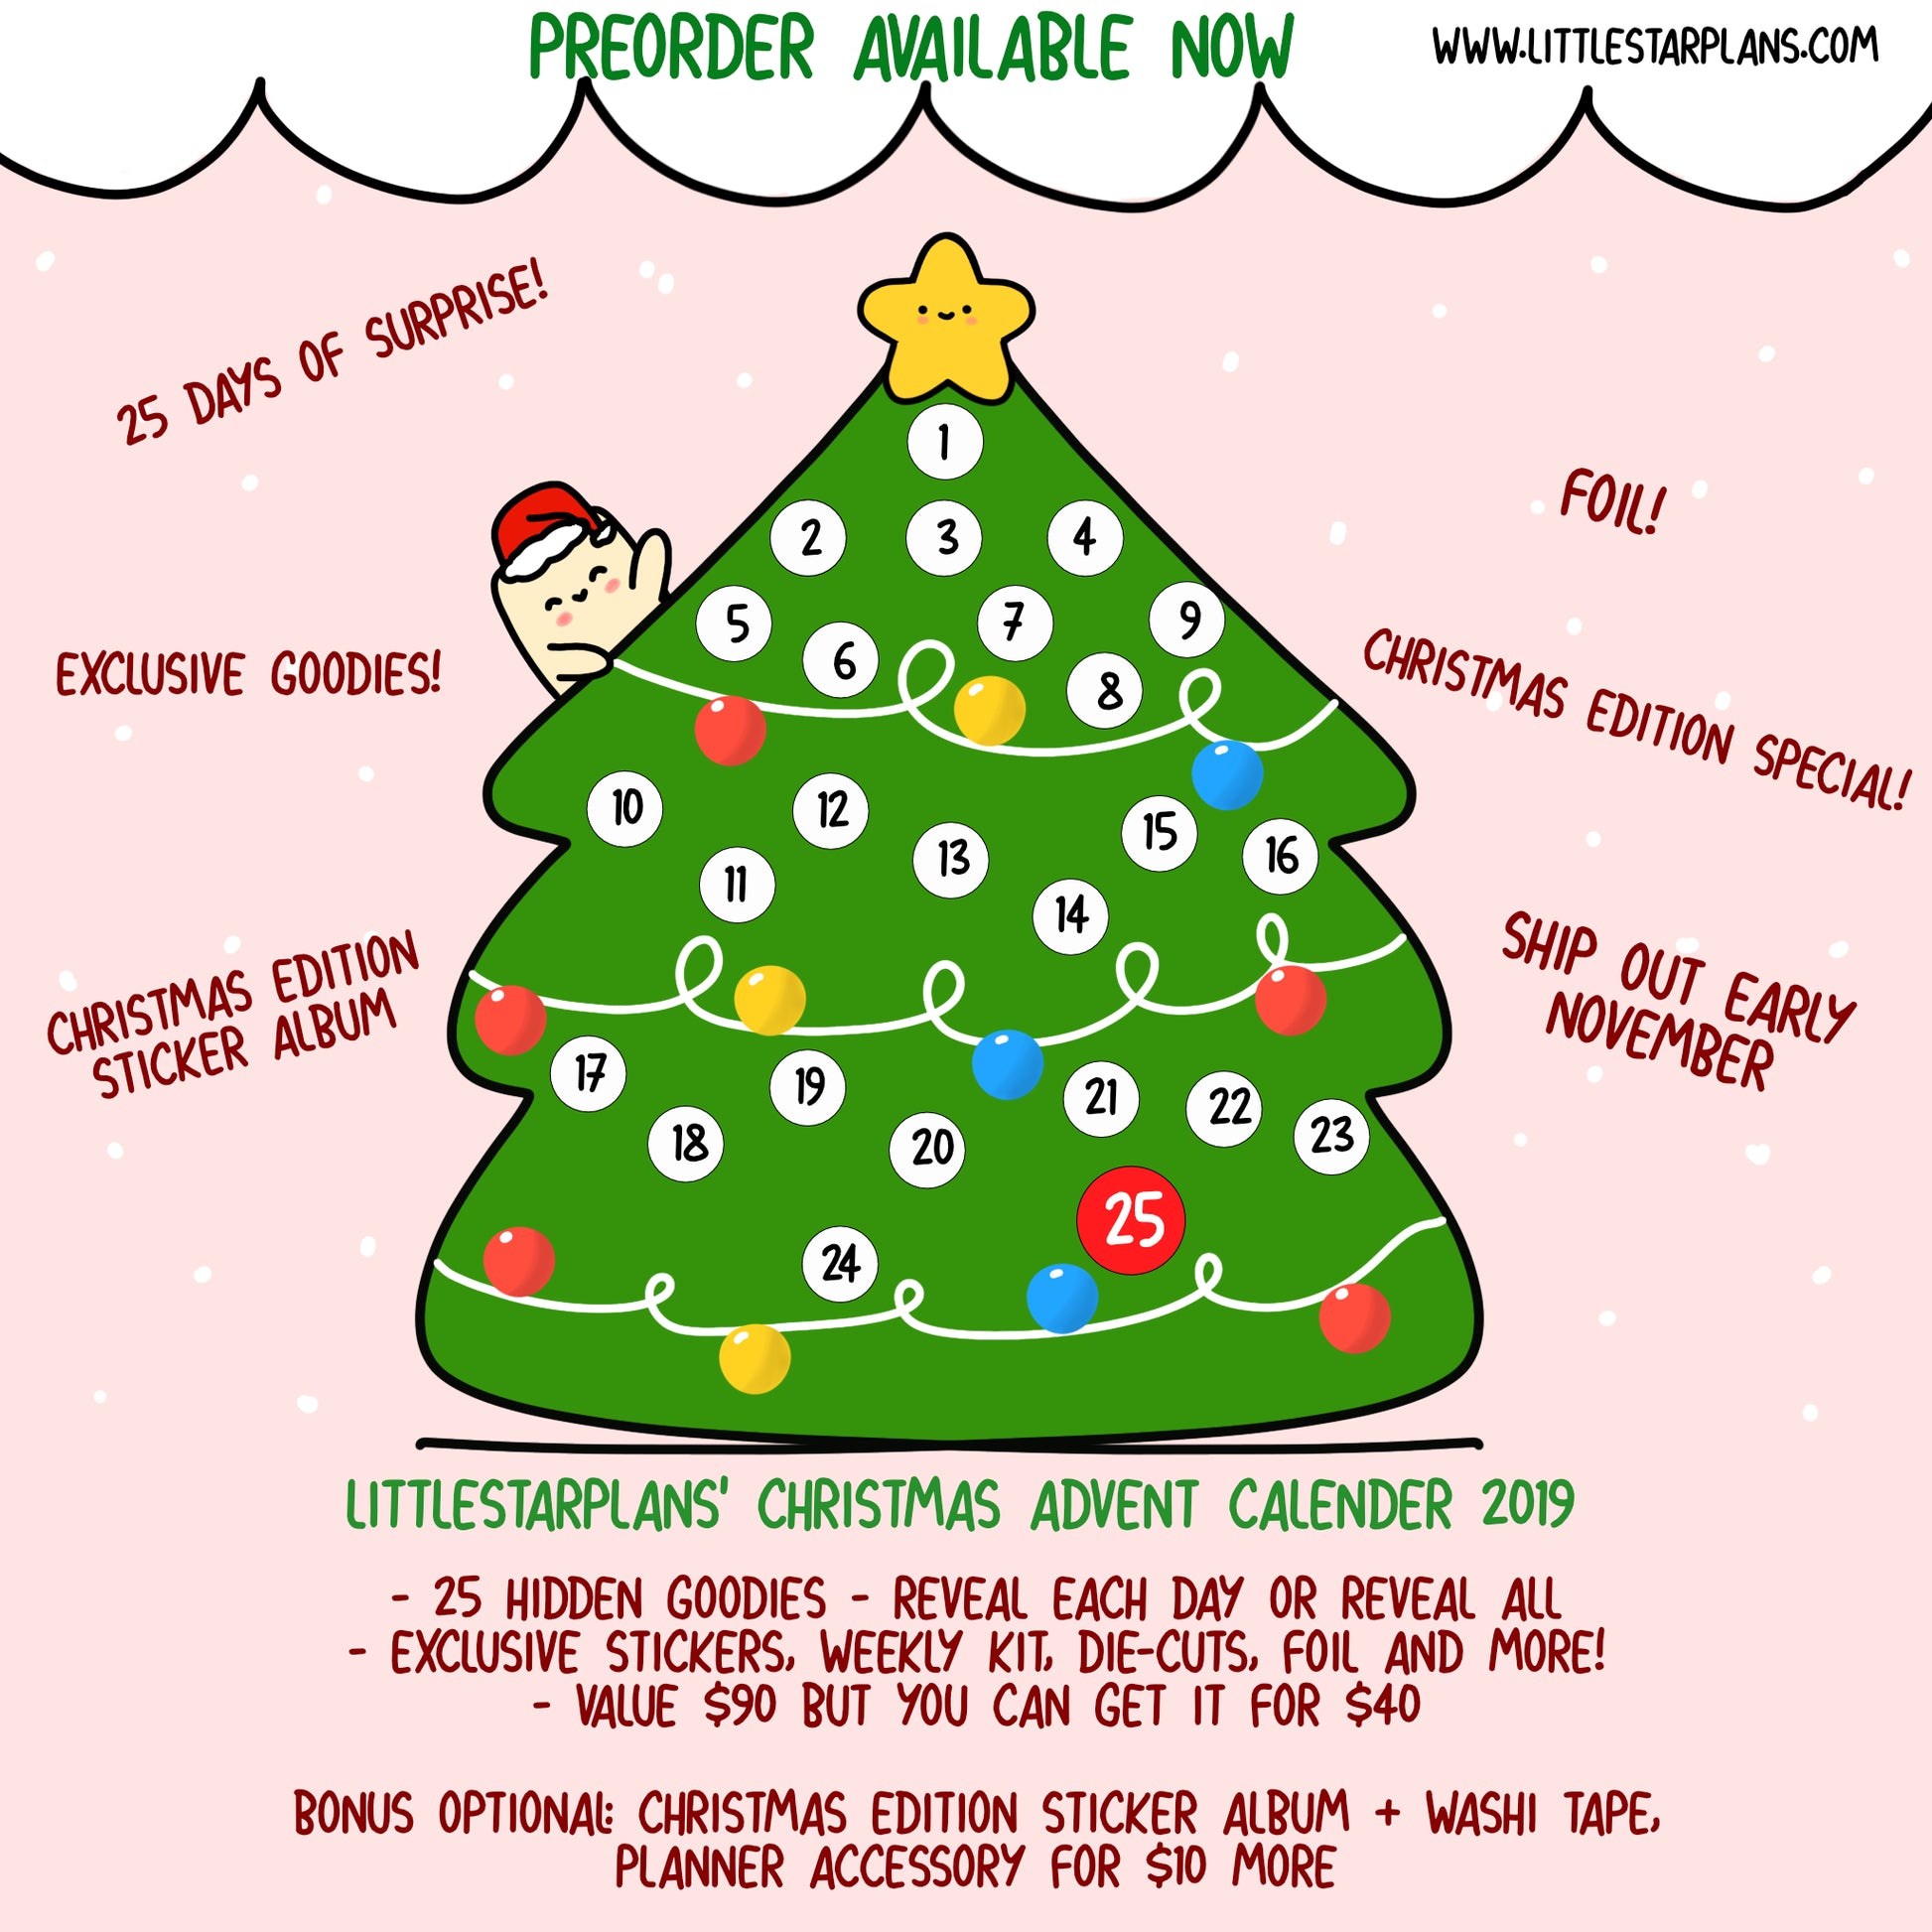 USA - Littlestarplans' Christmas Advent Calendar 2019 - Planner Sticker Version - Littlestarplans